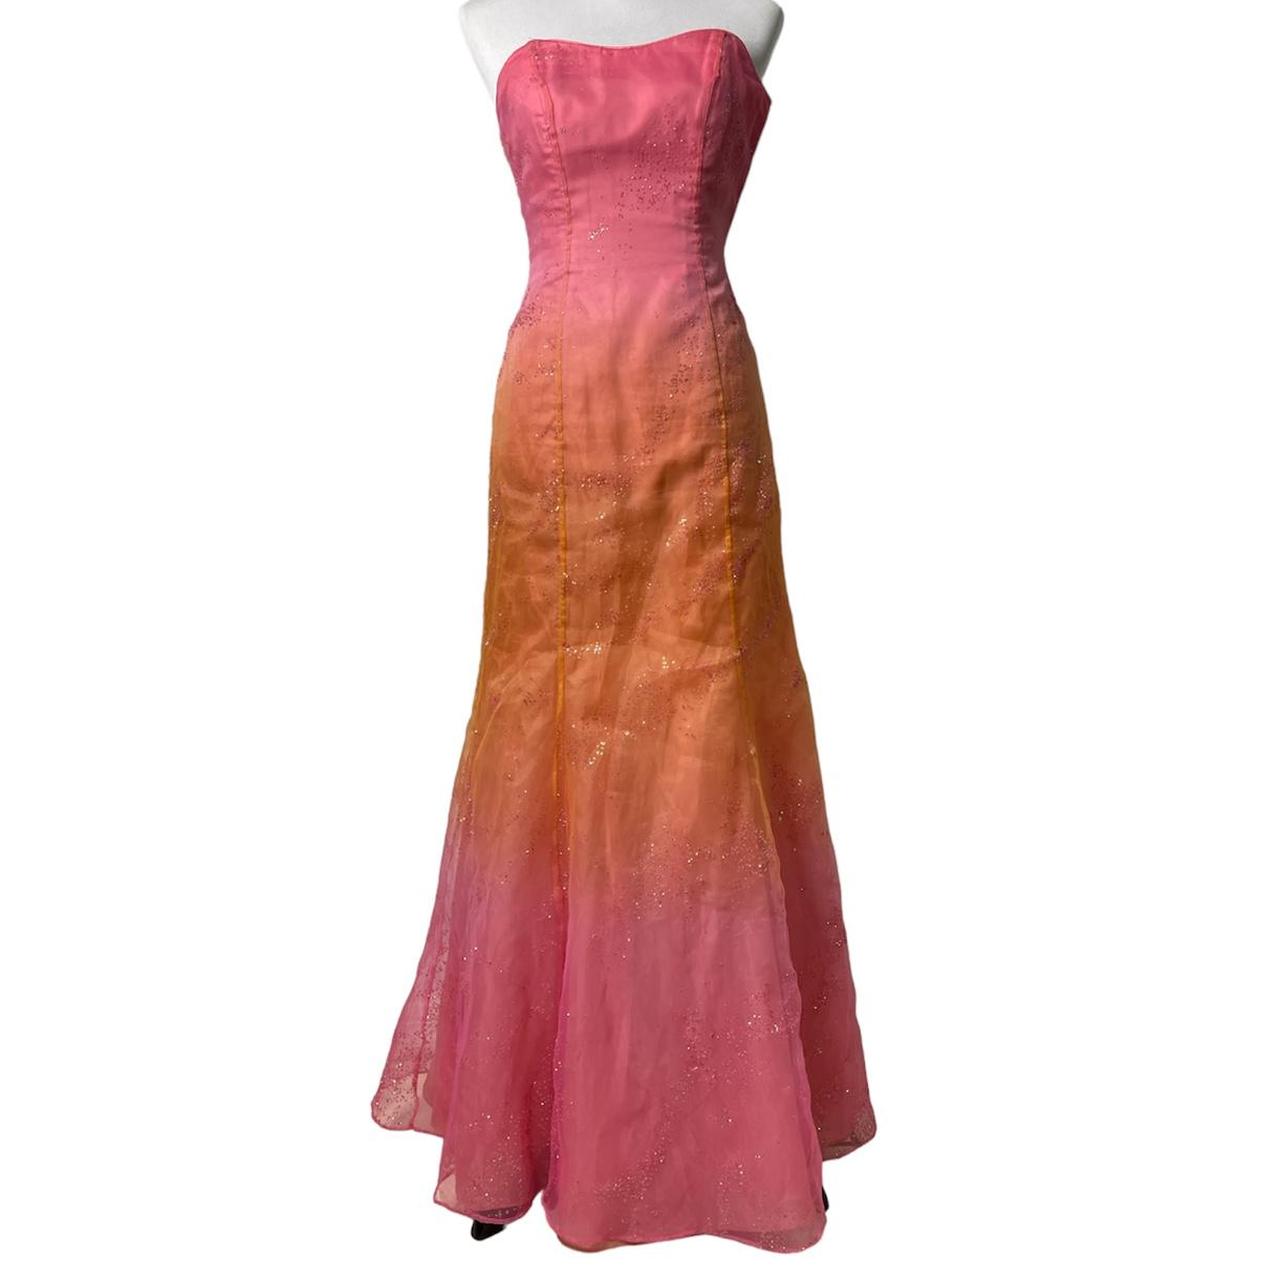 Gorman Women's Orange and Pink Dress